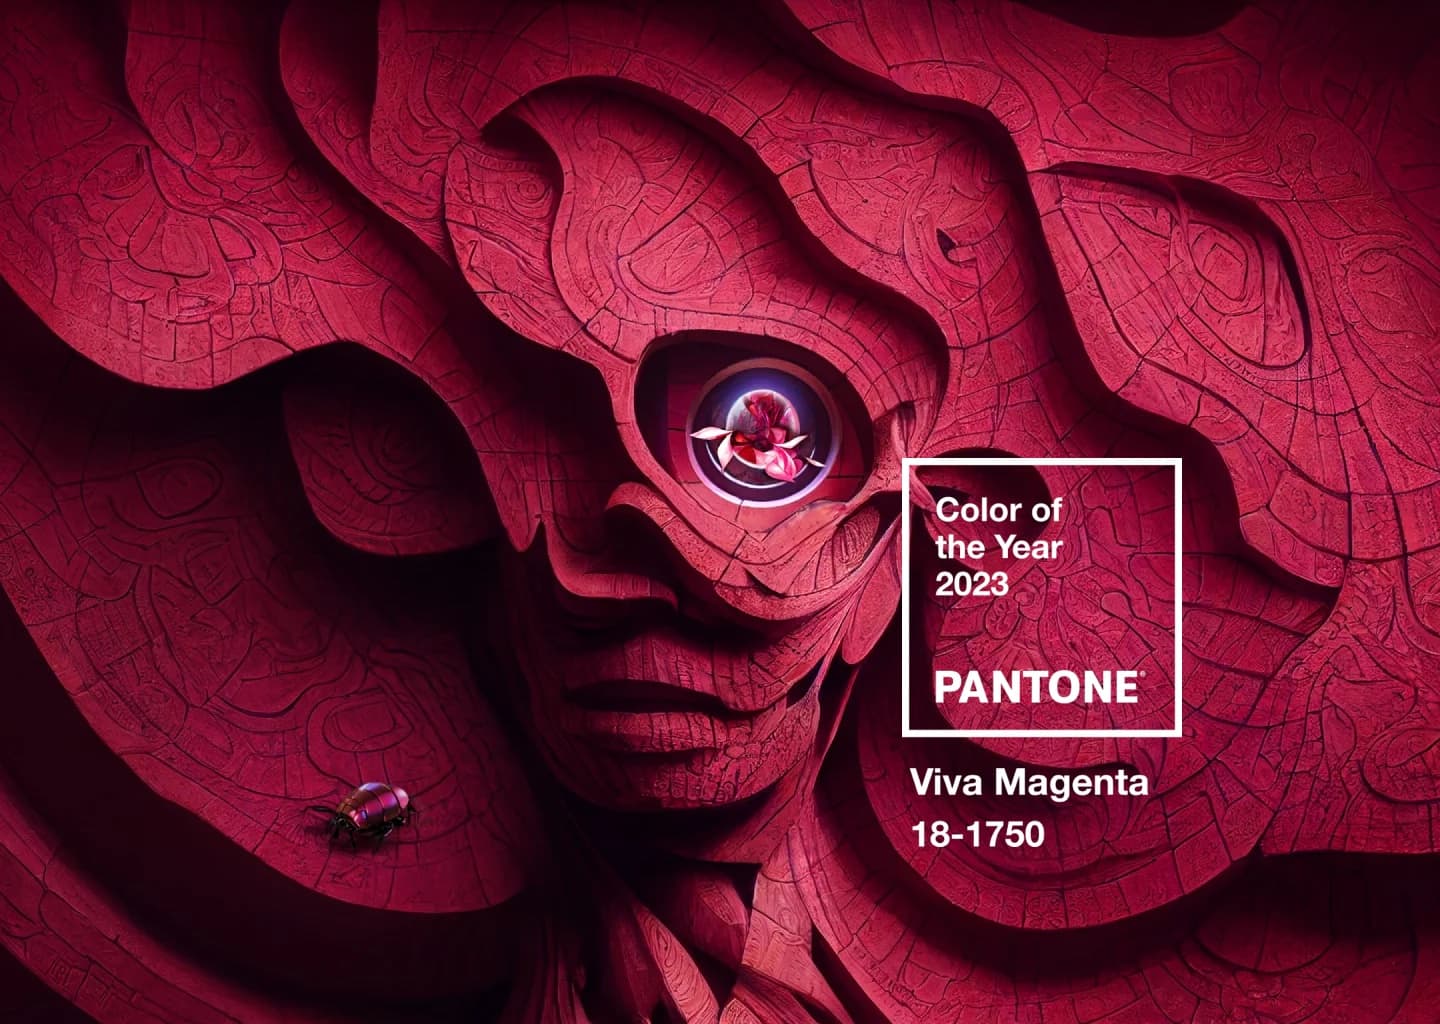 Pantone introduces Color of the Year 2023: Pantone 18-1750 Viva Magenta